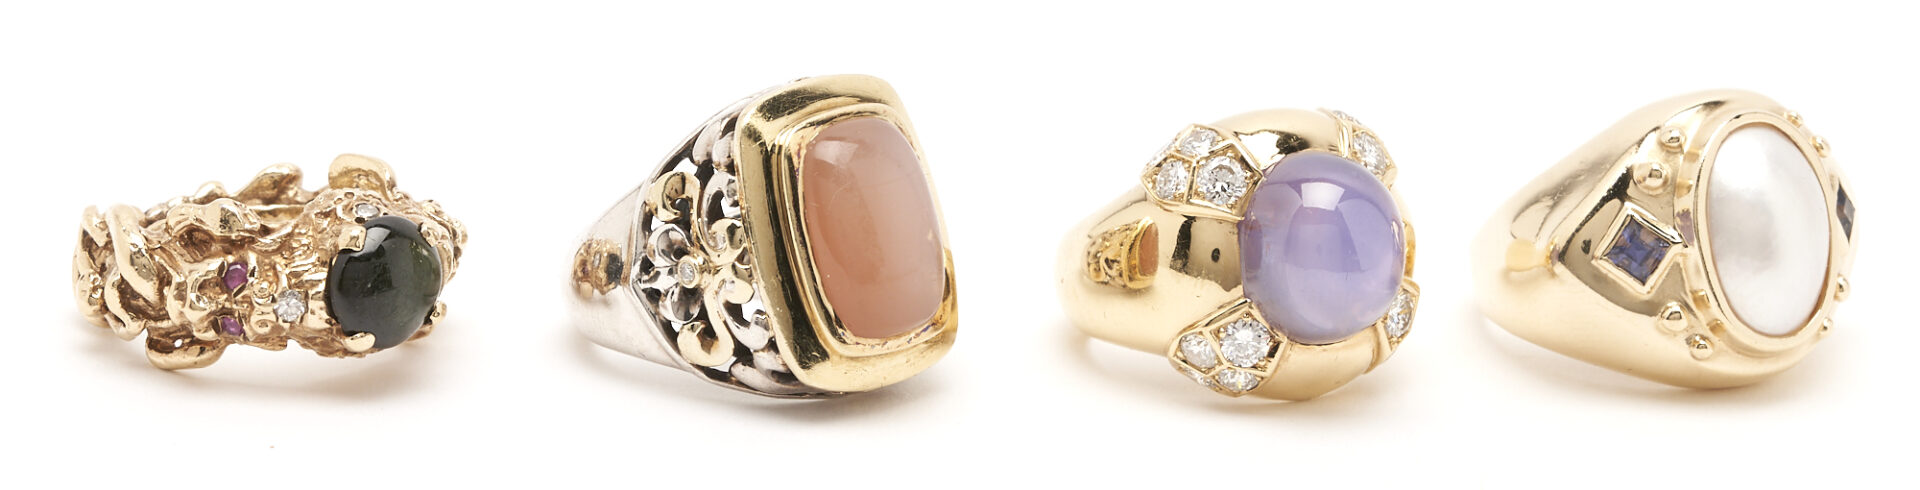 Lot 697: 4 Ladies Gold & Gemstone Rings